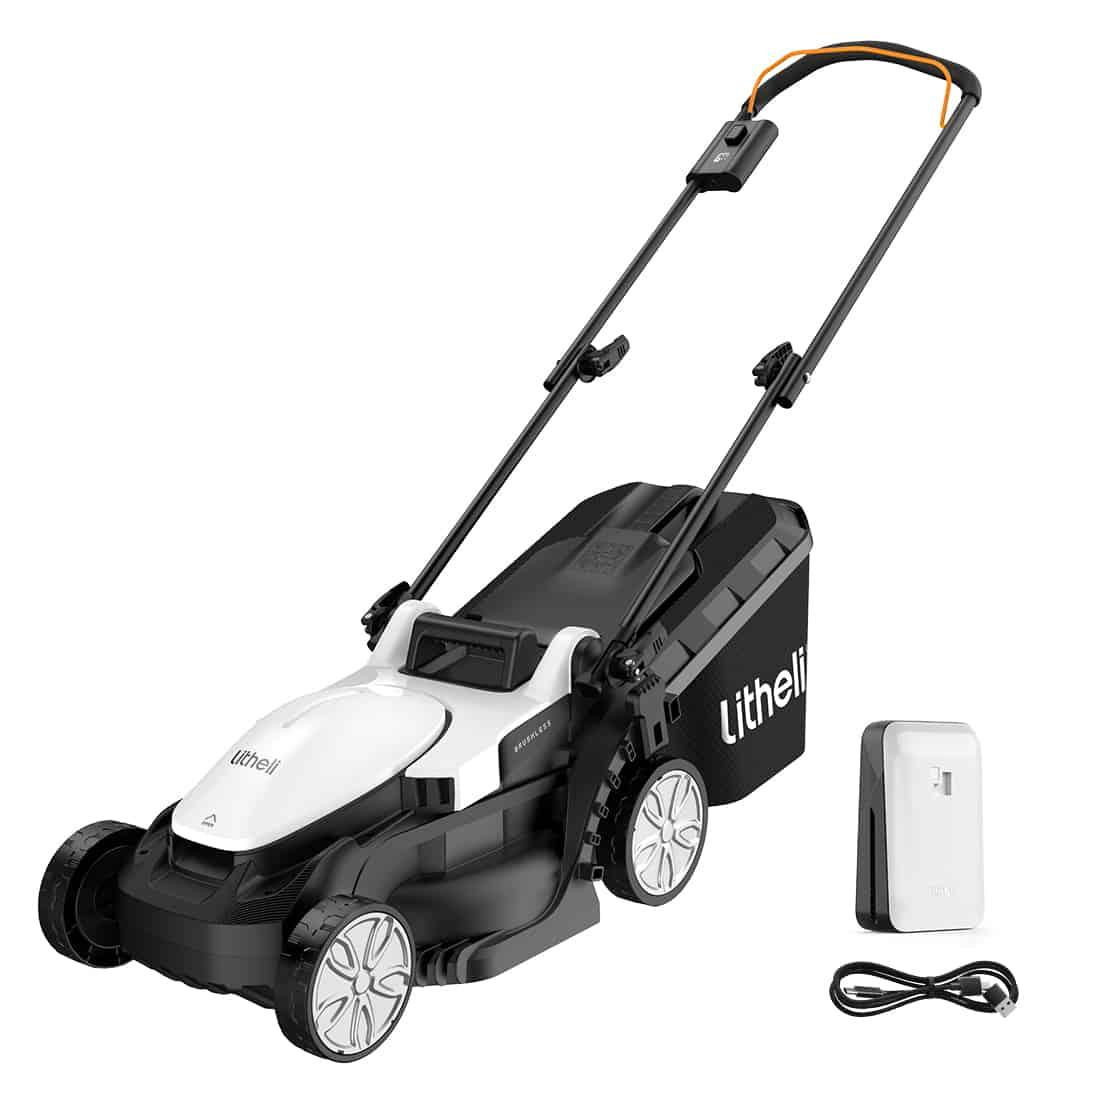 Litheli U20 20V Cordless Brushless Lawn Mower